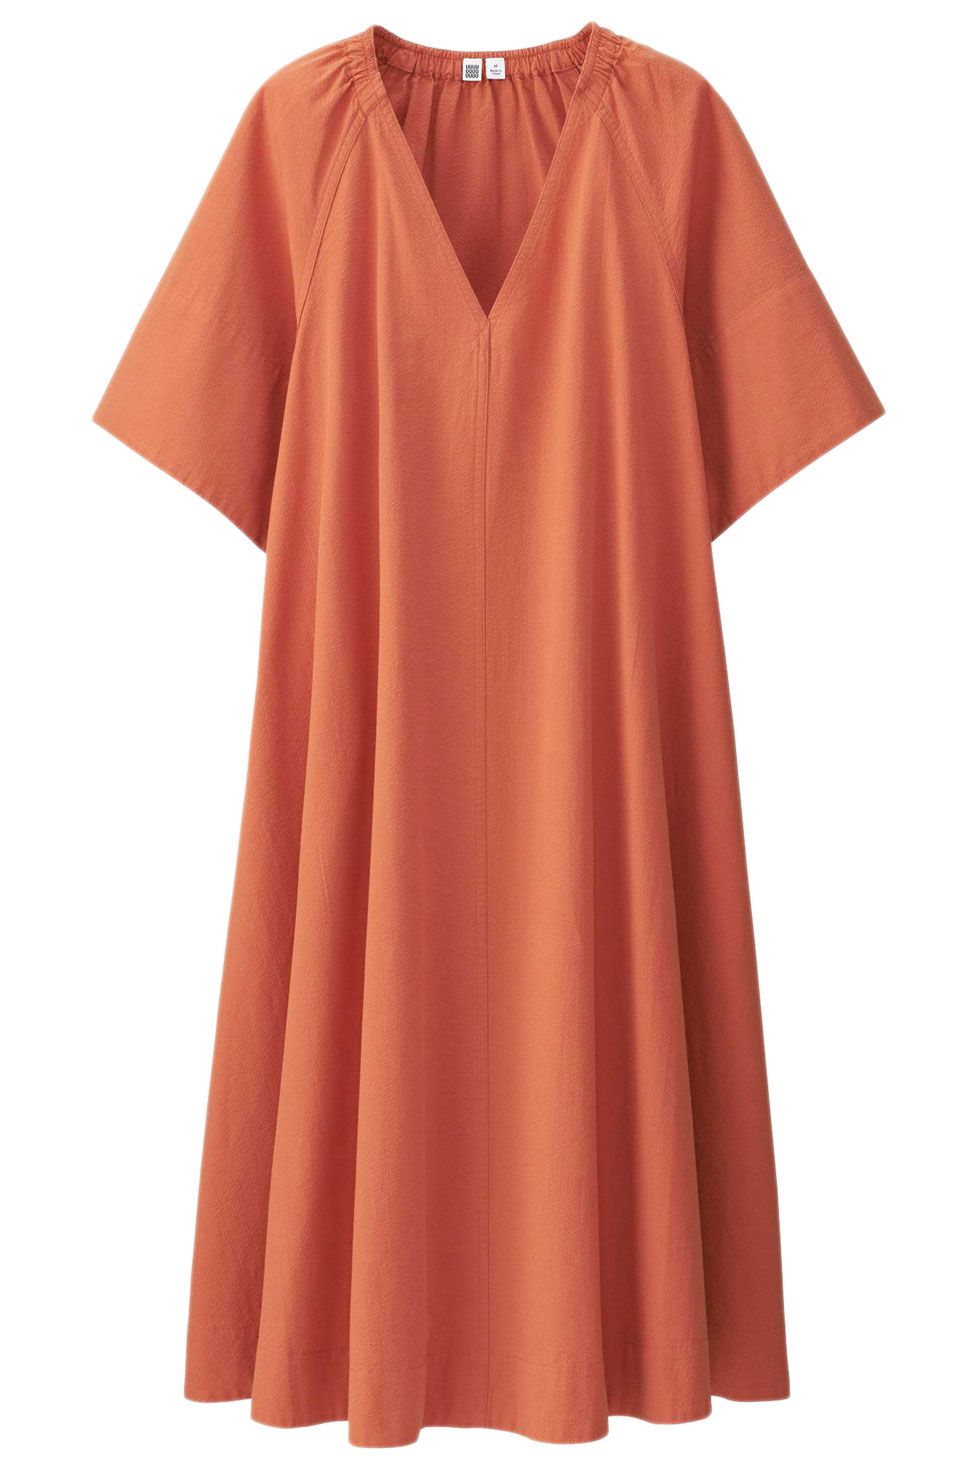 <p>
Uniqlo U Seersucker Short Sleeve Dress, $30; <a href="https://www.uniqlo.com/us/en/women-u-seersucker-short-sleeve-dress-196470.html?dwvar_196470_color=COL40&amp;cgid=women-dresses-and-jumpsuits#start=14&amp;cgid=women-dresses-and-jumpsuits">uniqlo.com</a></p><p><span class="redactor-invisible-space" data-verified="redactor" data-redactor-tag="span" data-redactor-class="redactor-invisible-space"></span></p>